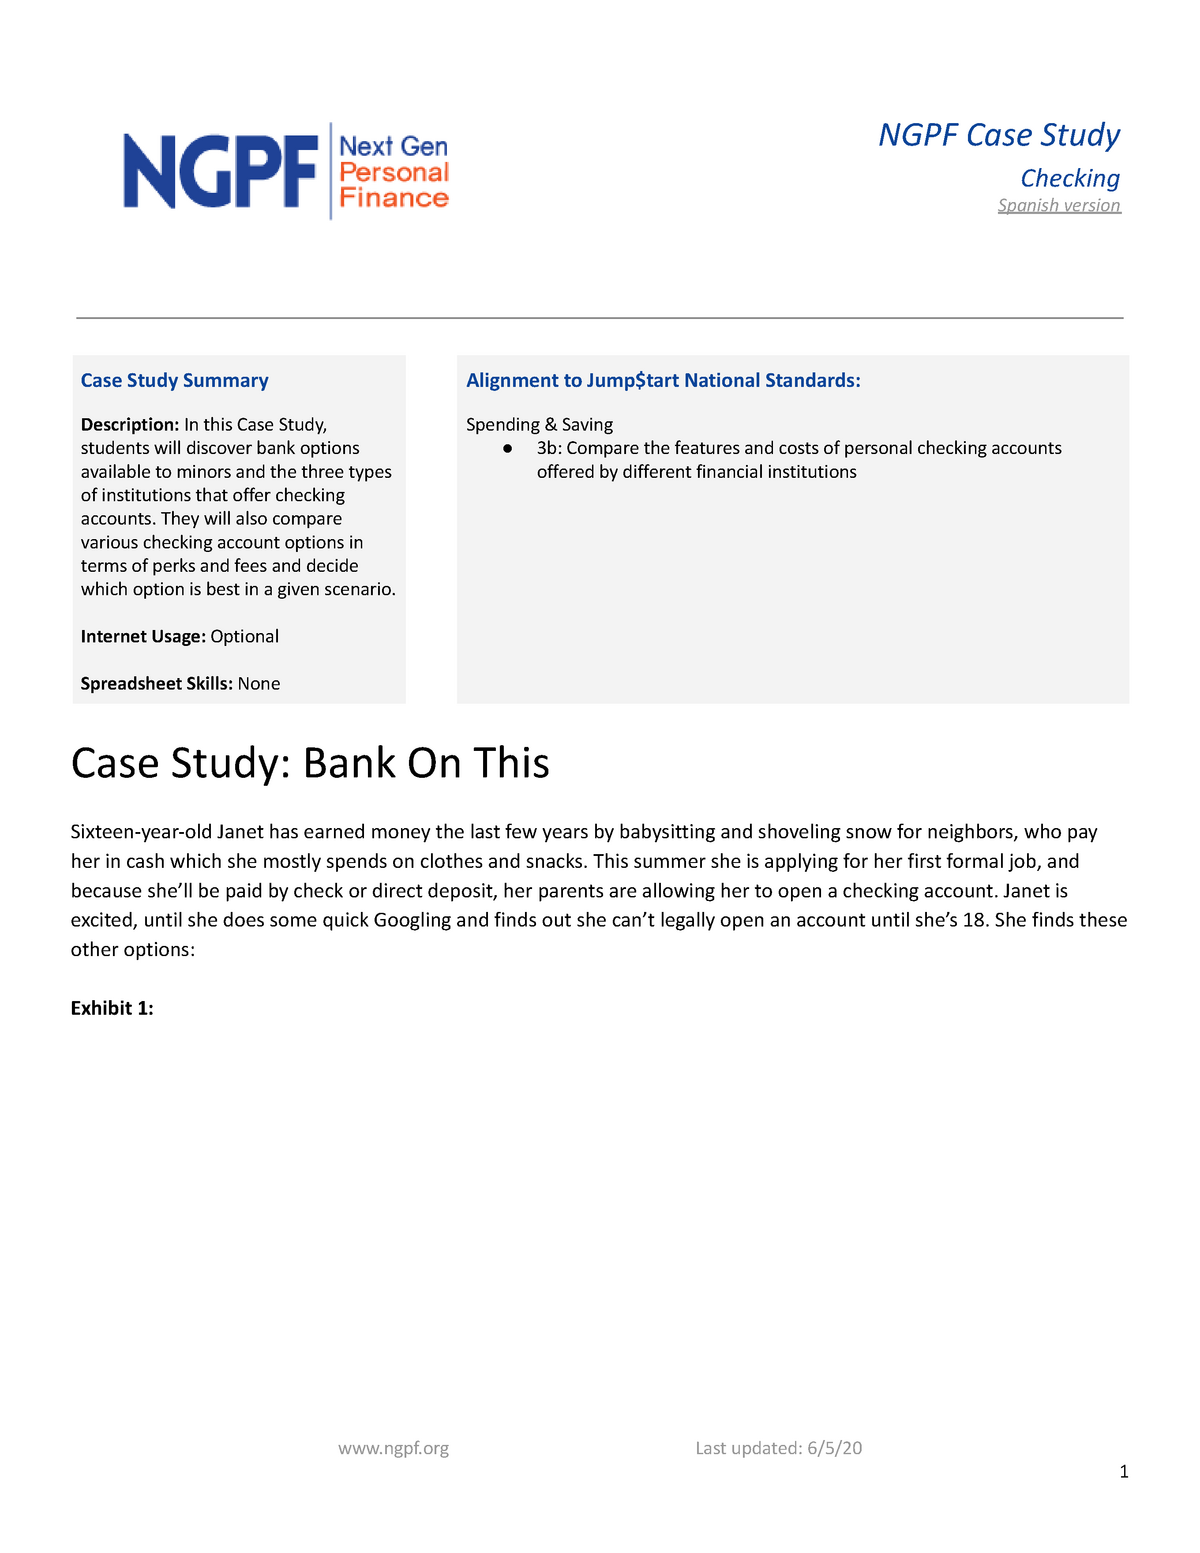 ngpf case study investing #1